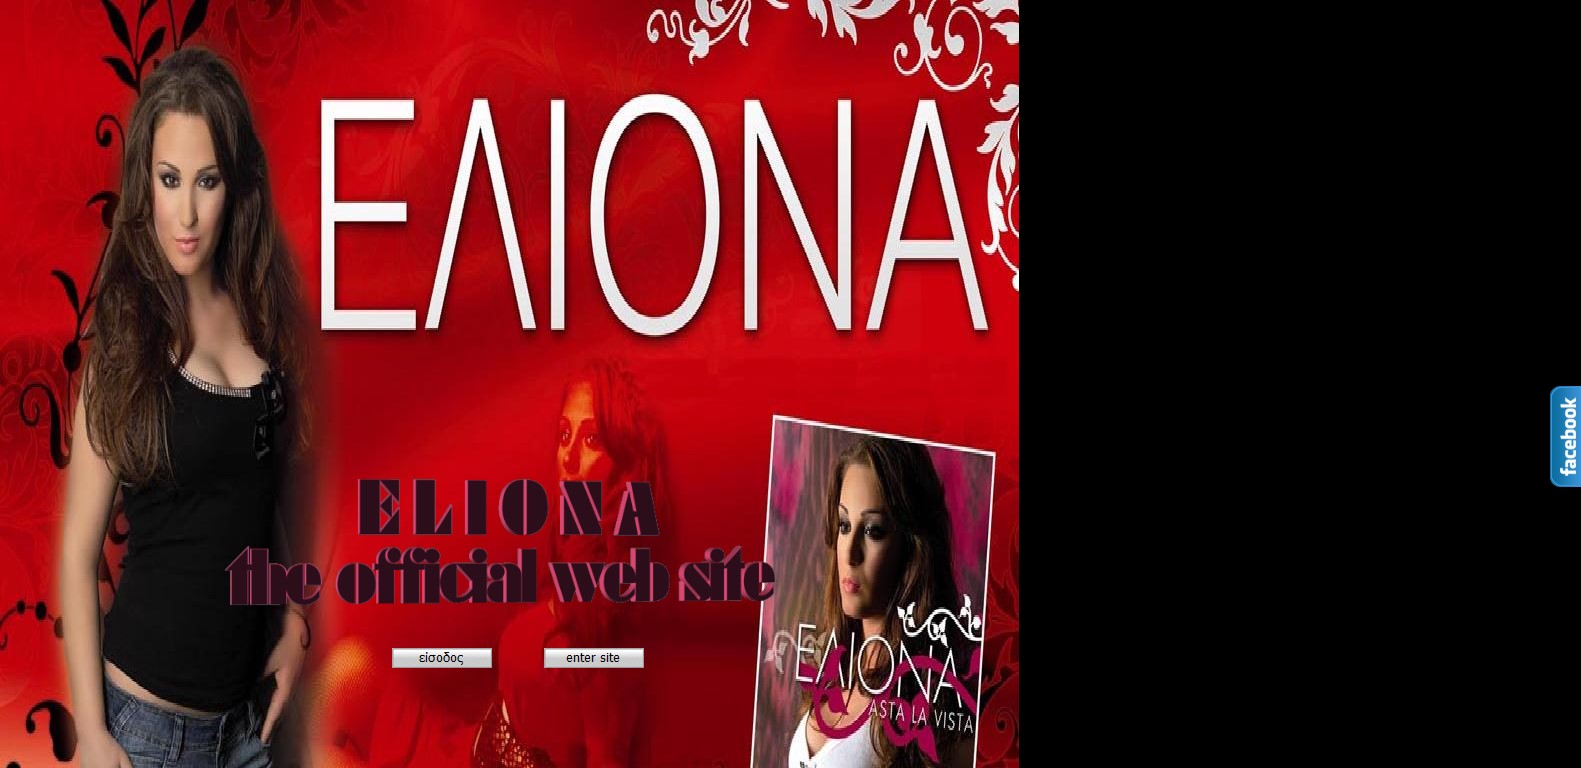 Eliona (2003 1st project HTML)